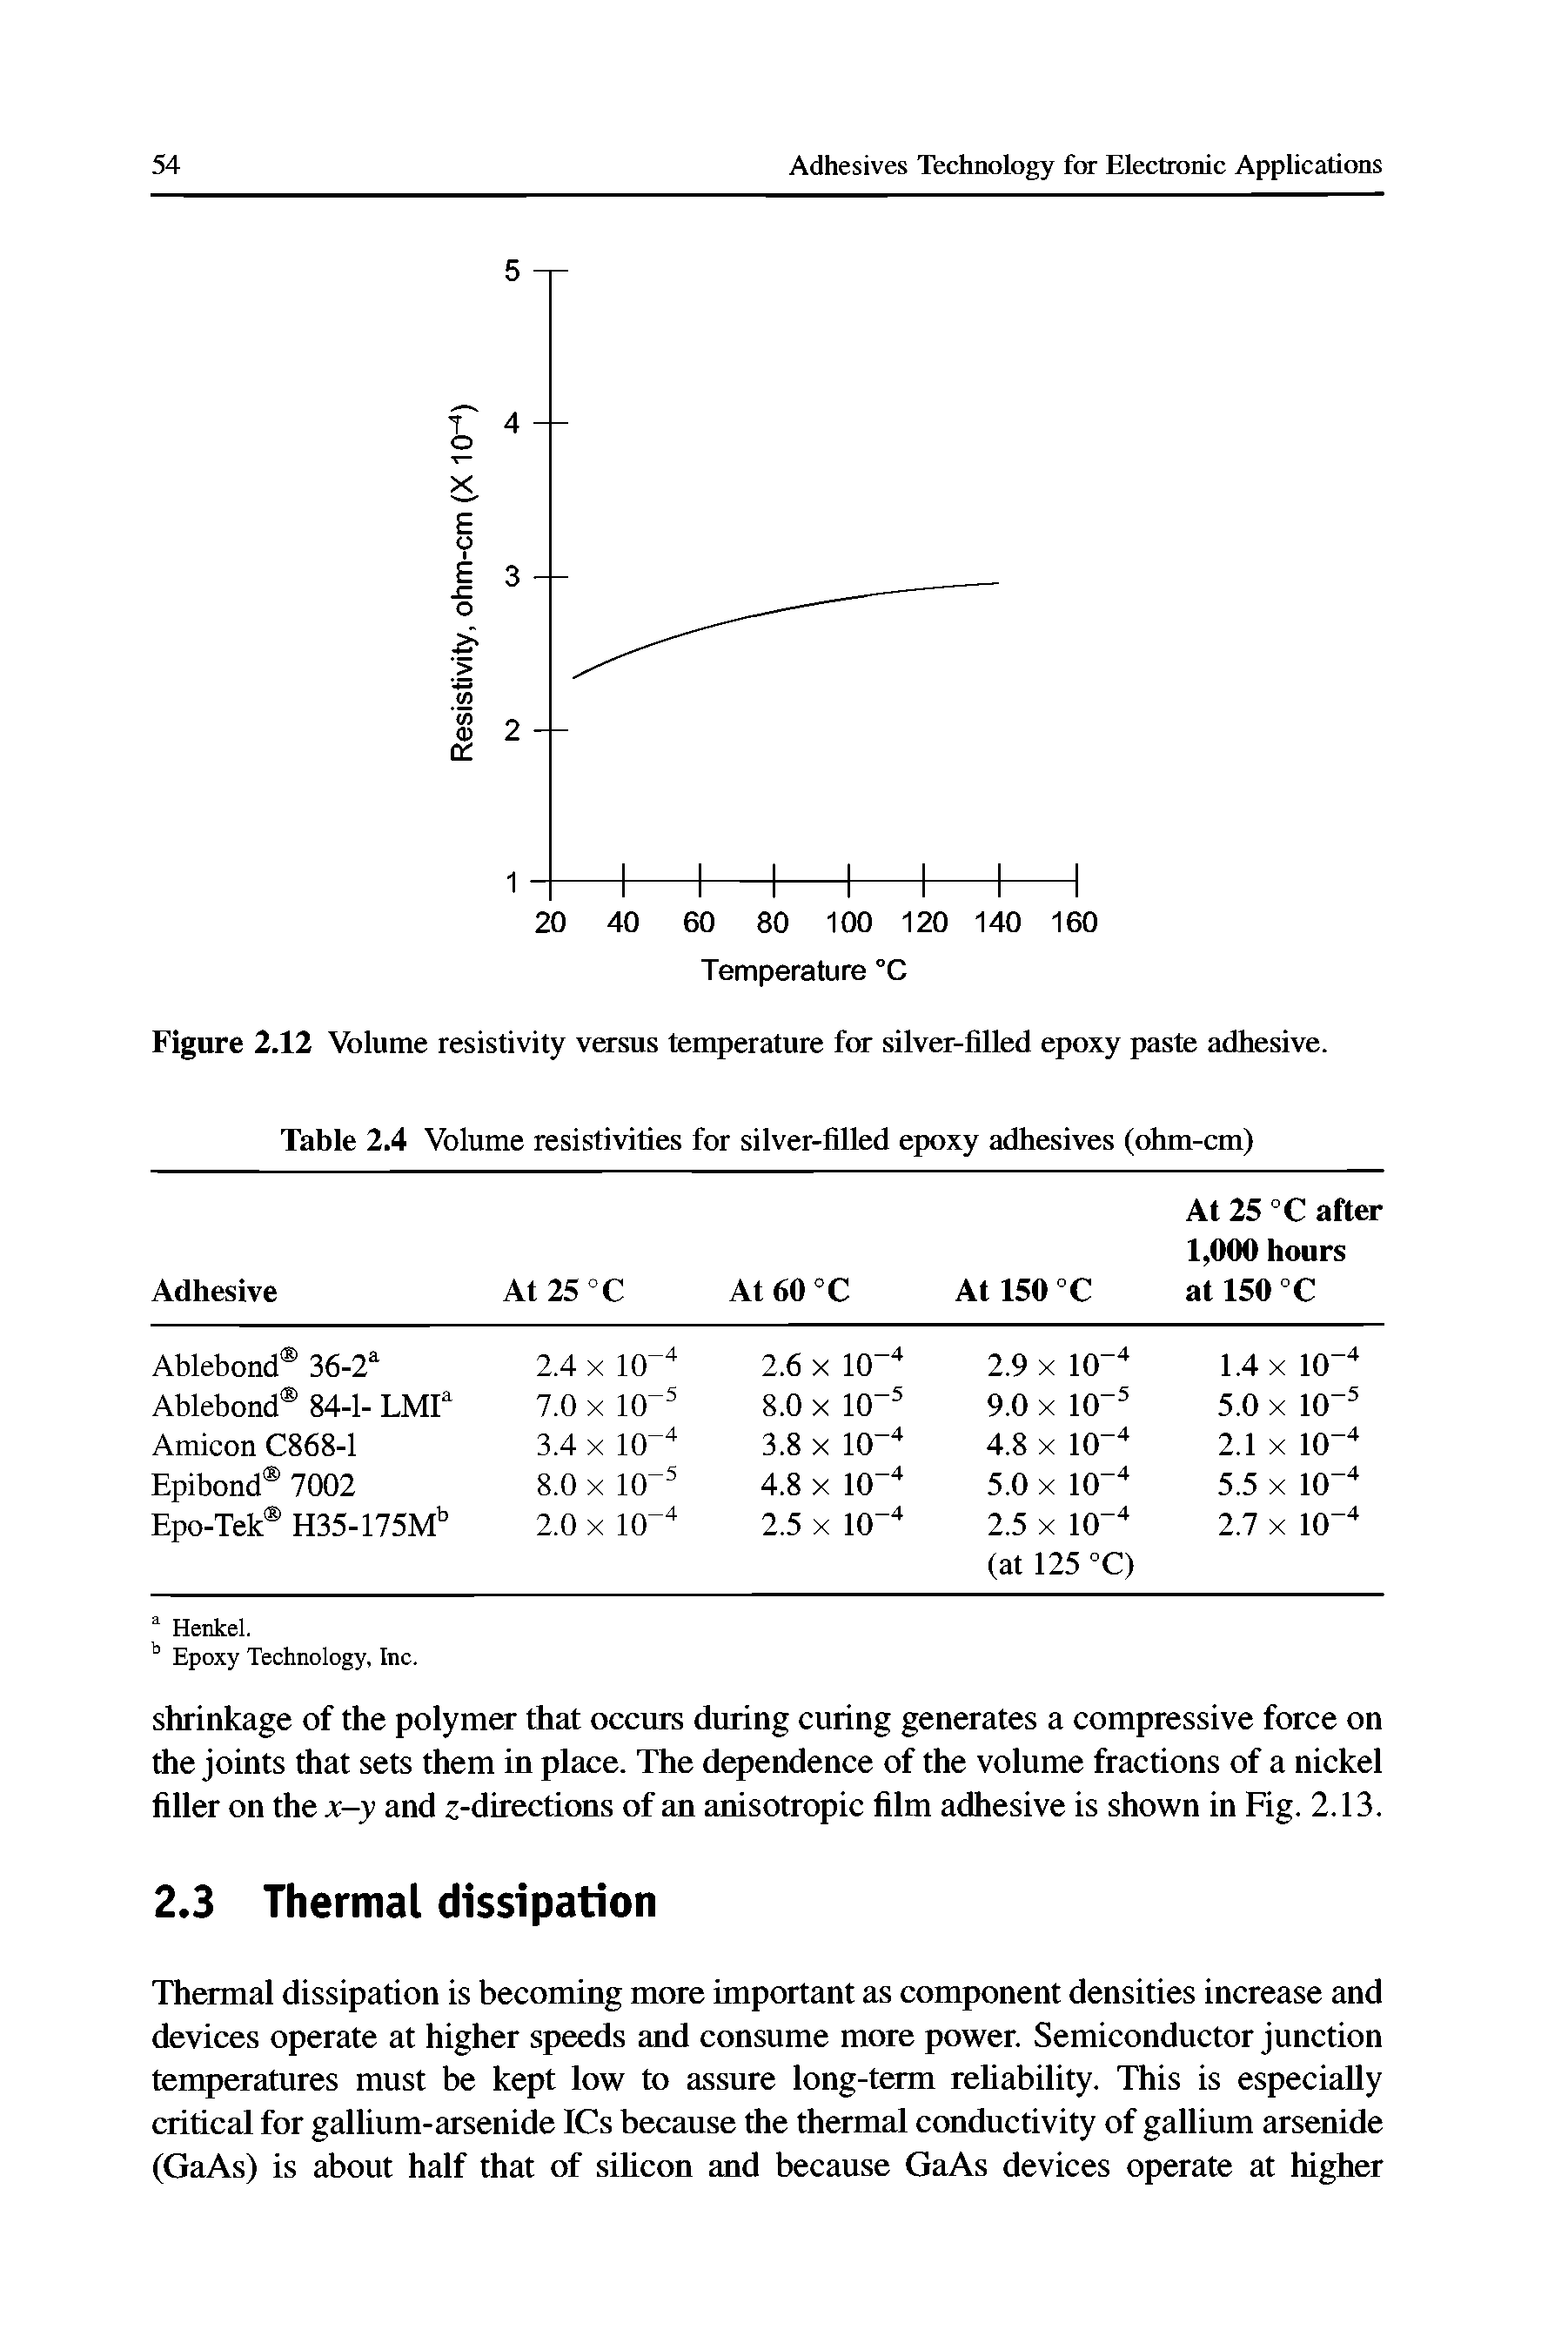 Figure 2.12 Volume resistivity versus temperature for silver-filled epoxy paste adhesive.